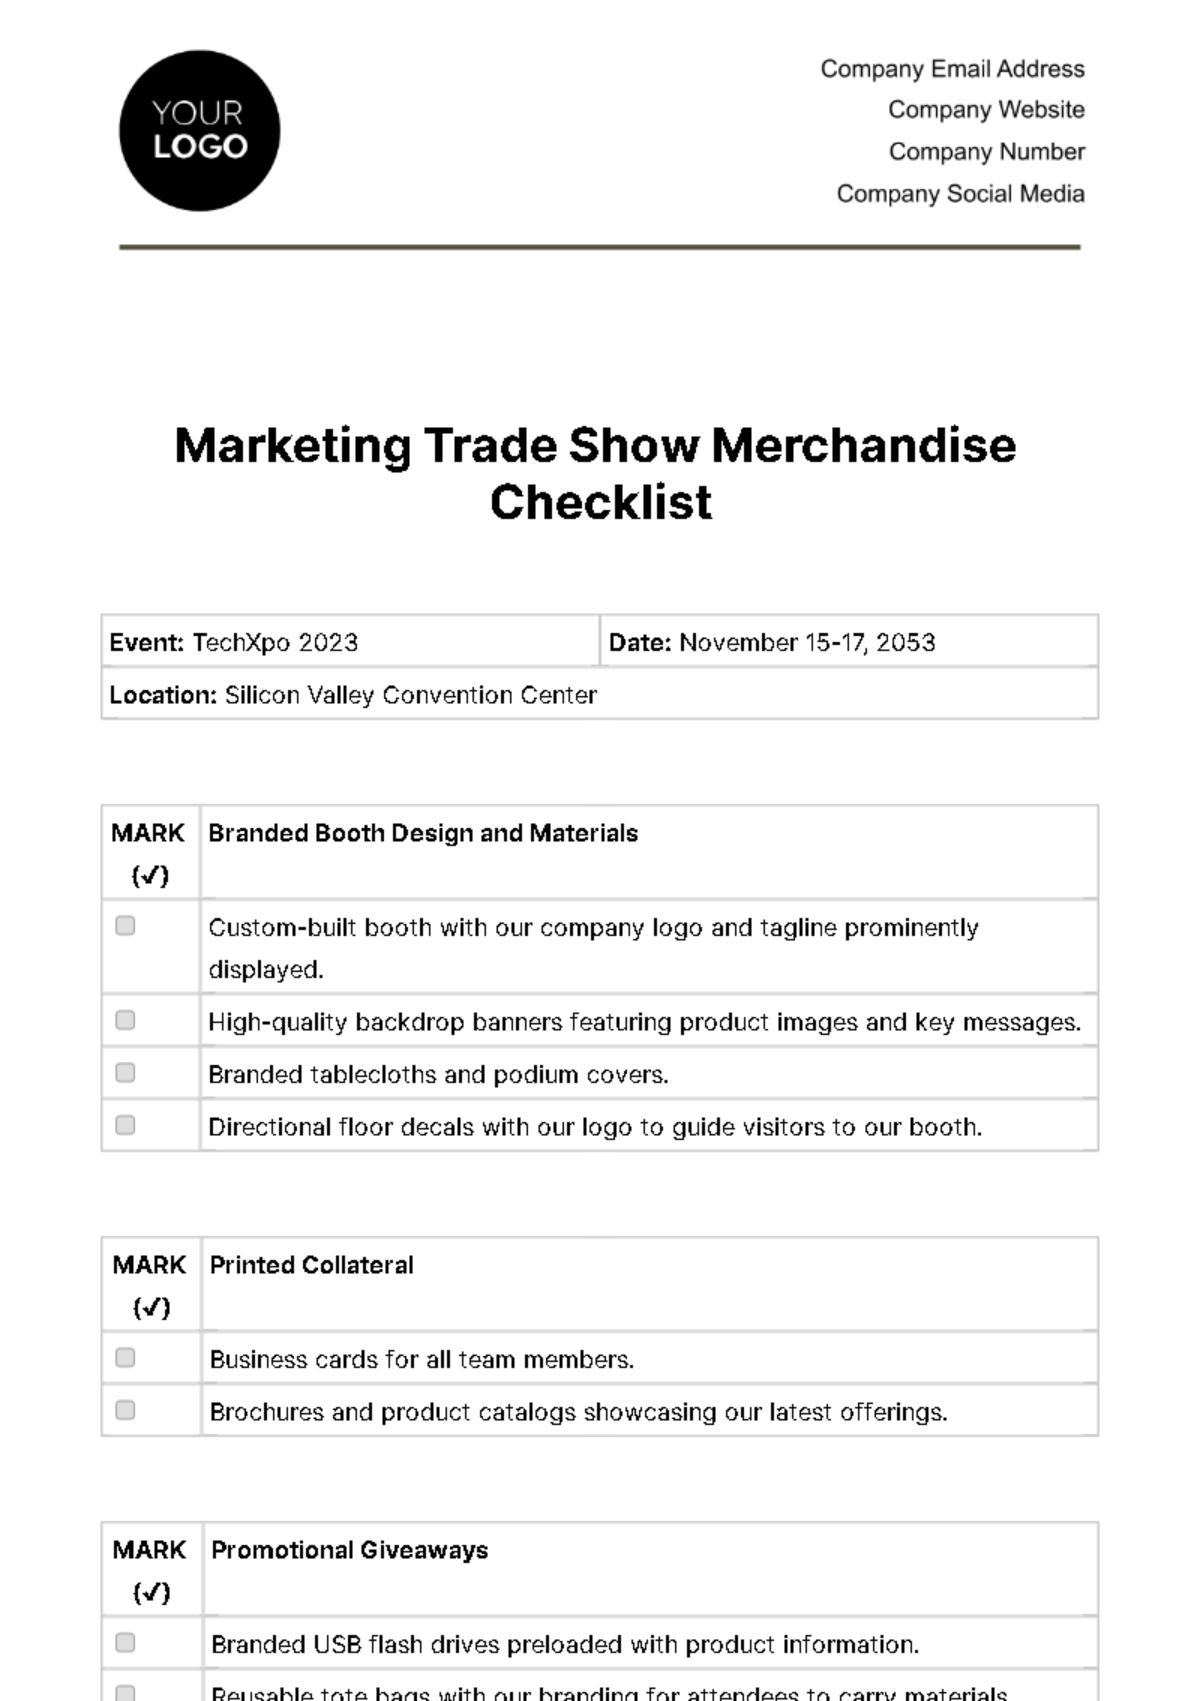 Free Marketing Trade Show Merchandise Checklist Template